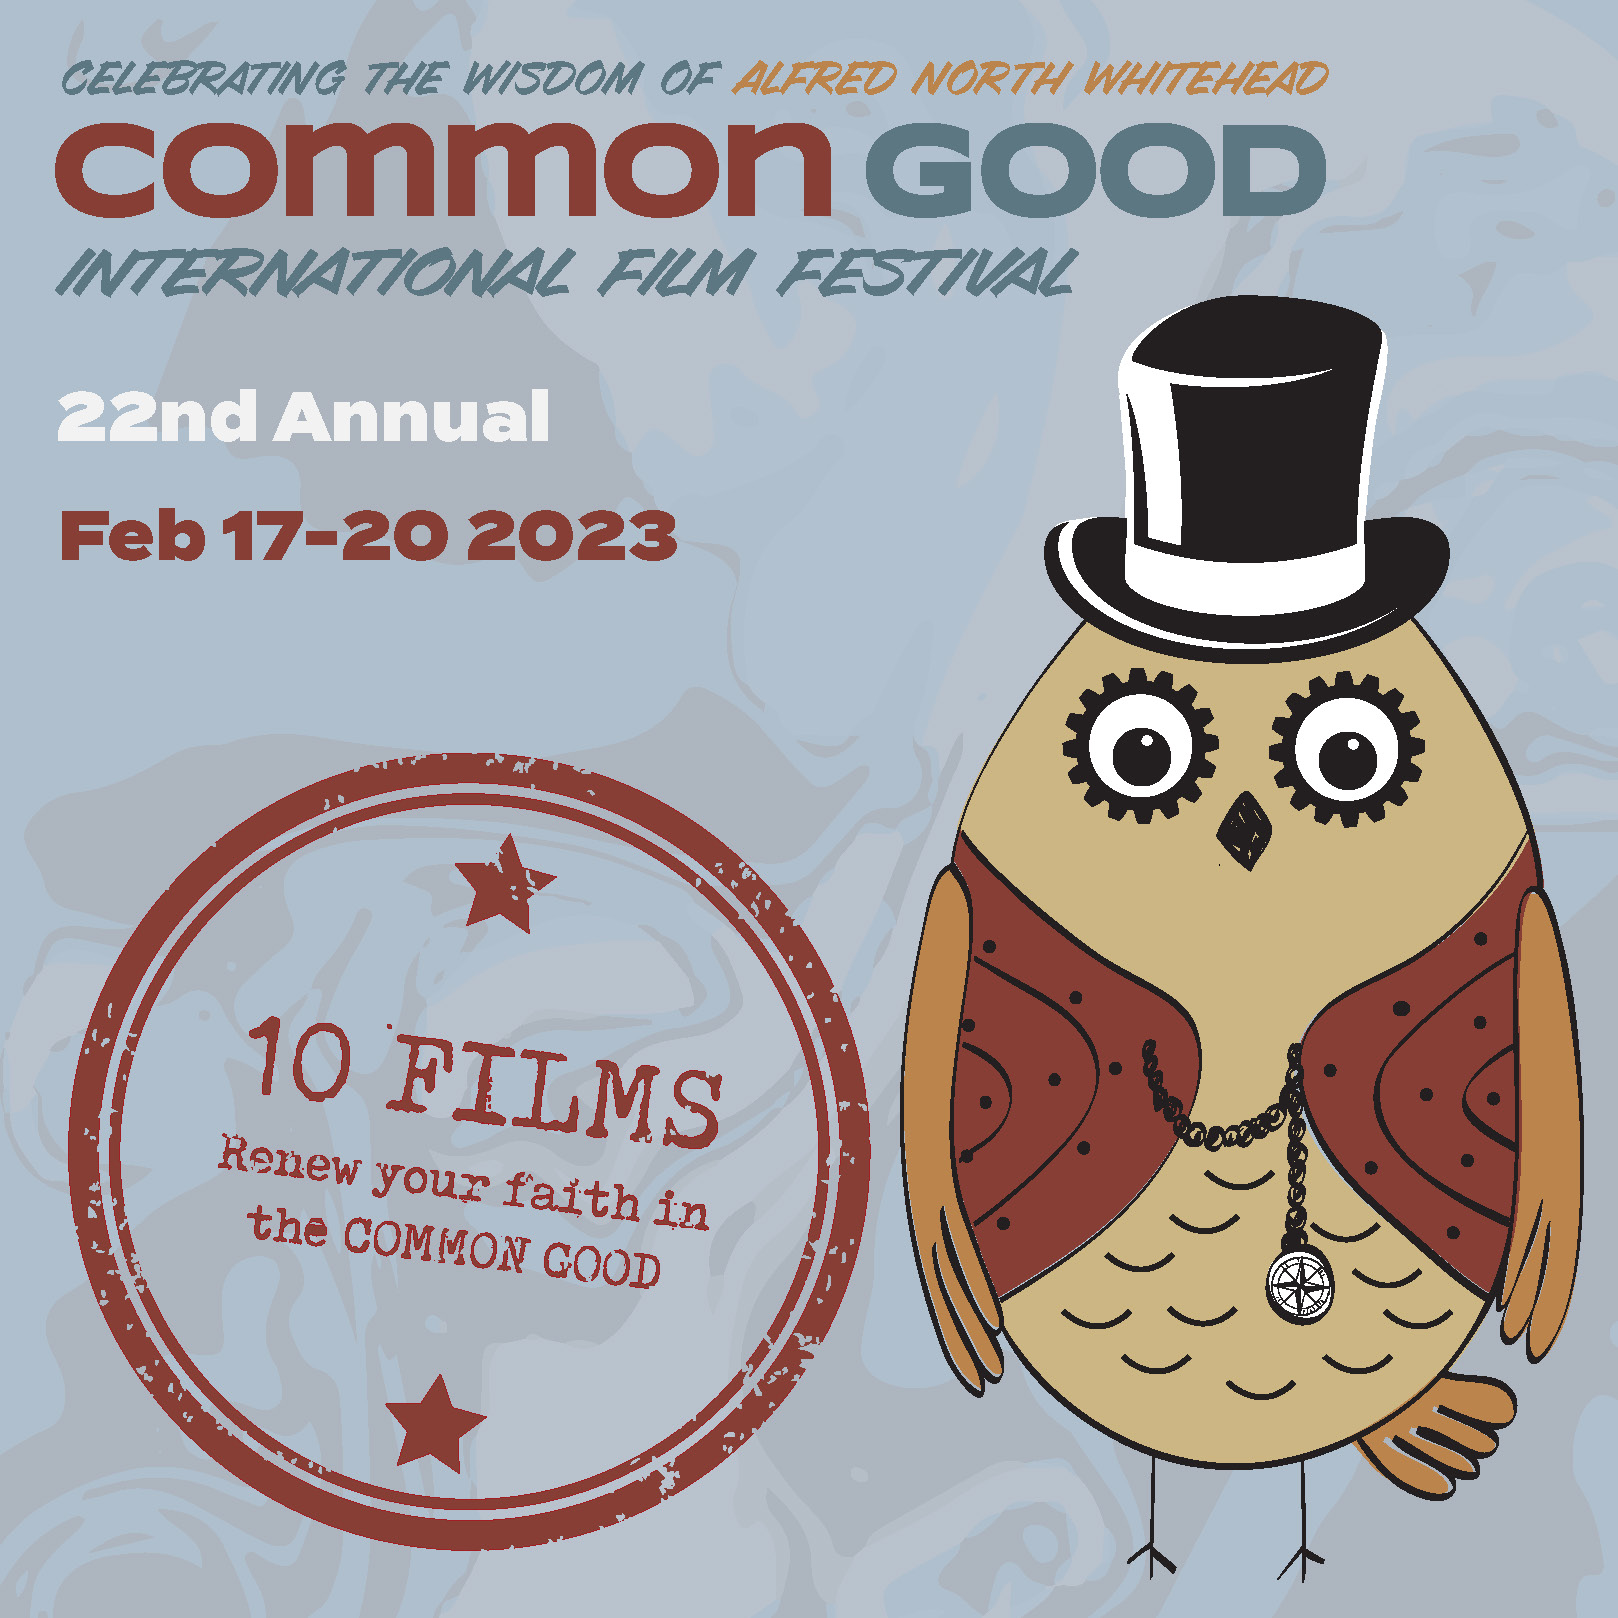 Common Good International Film Festival, a Claremont film festival in February 2023